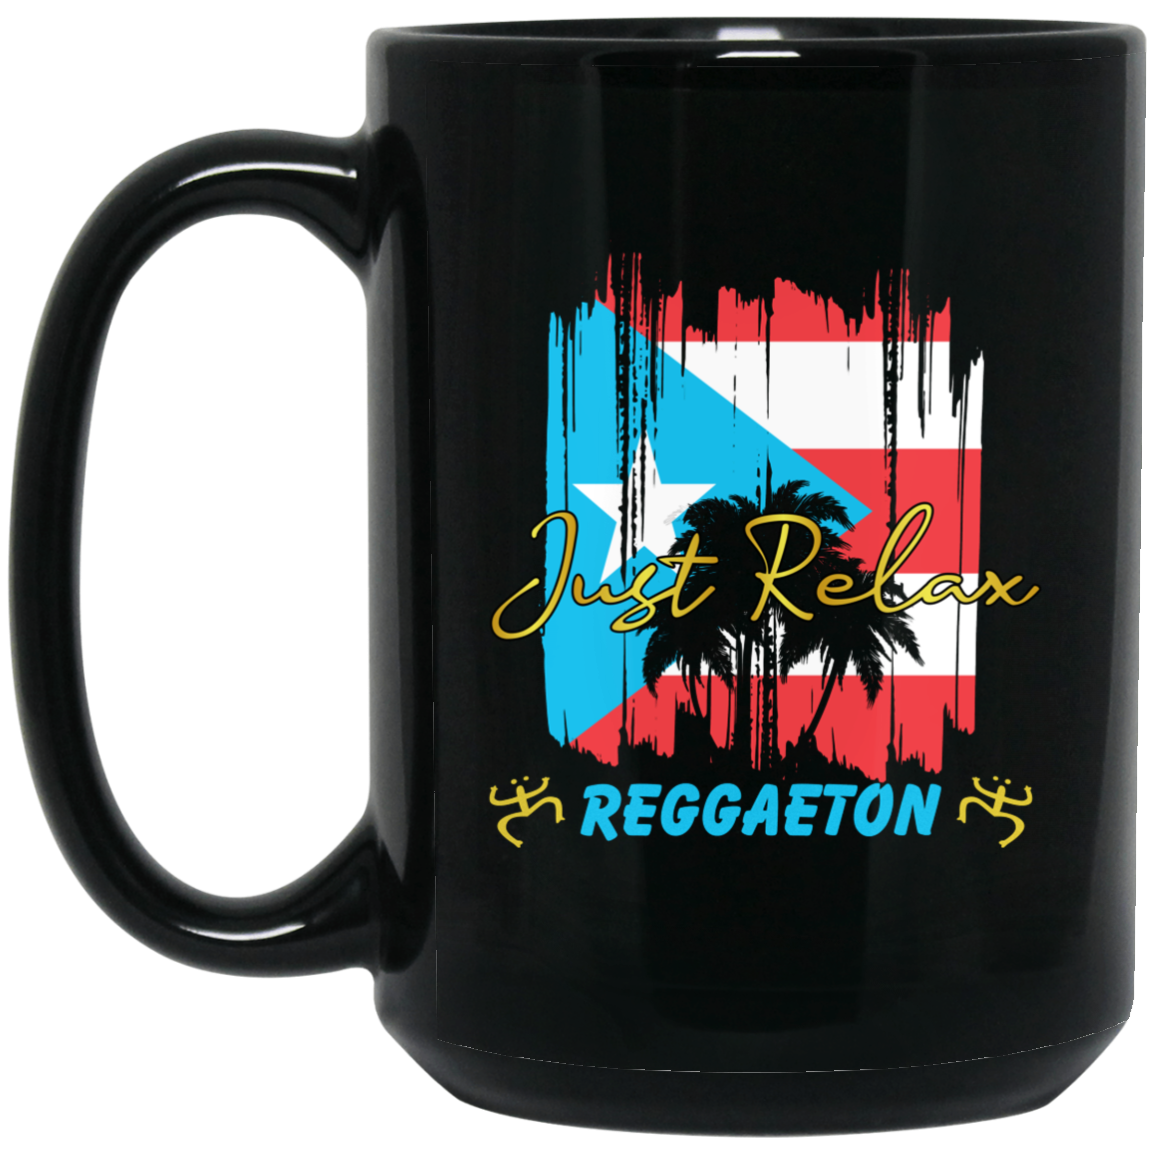 Just Relax Reggaeton 15 oz. Black Mug